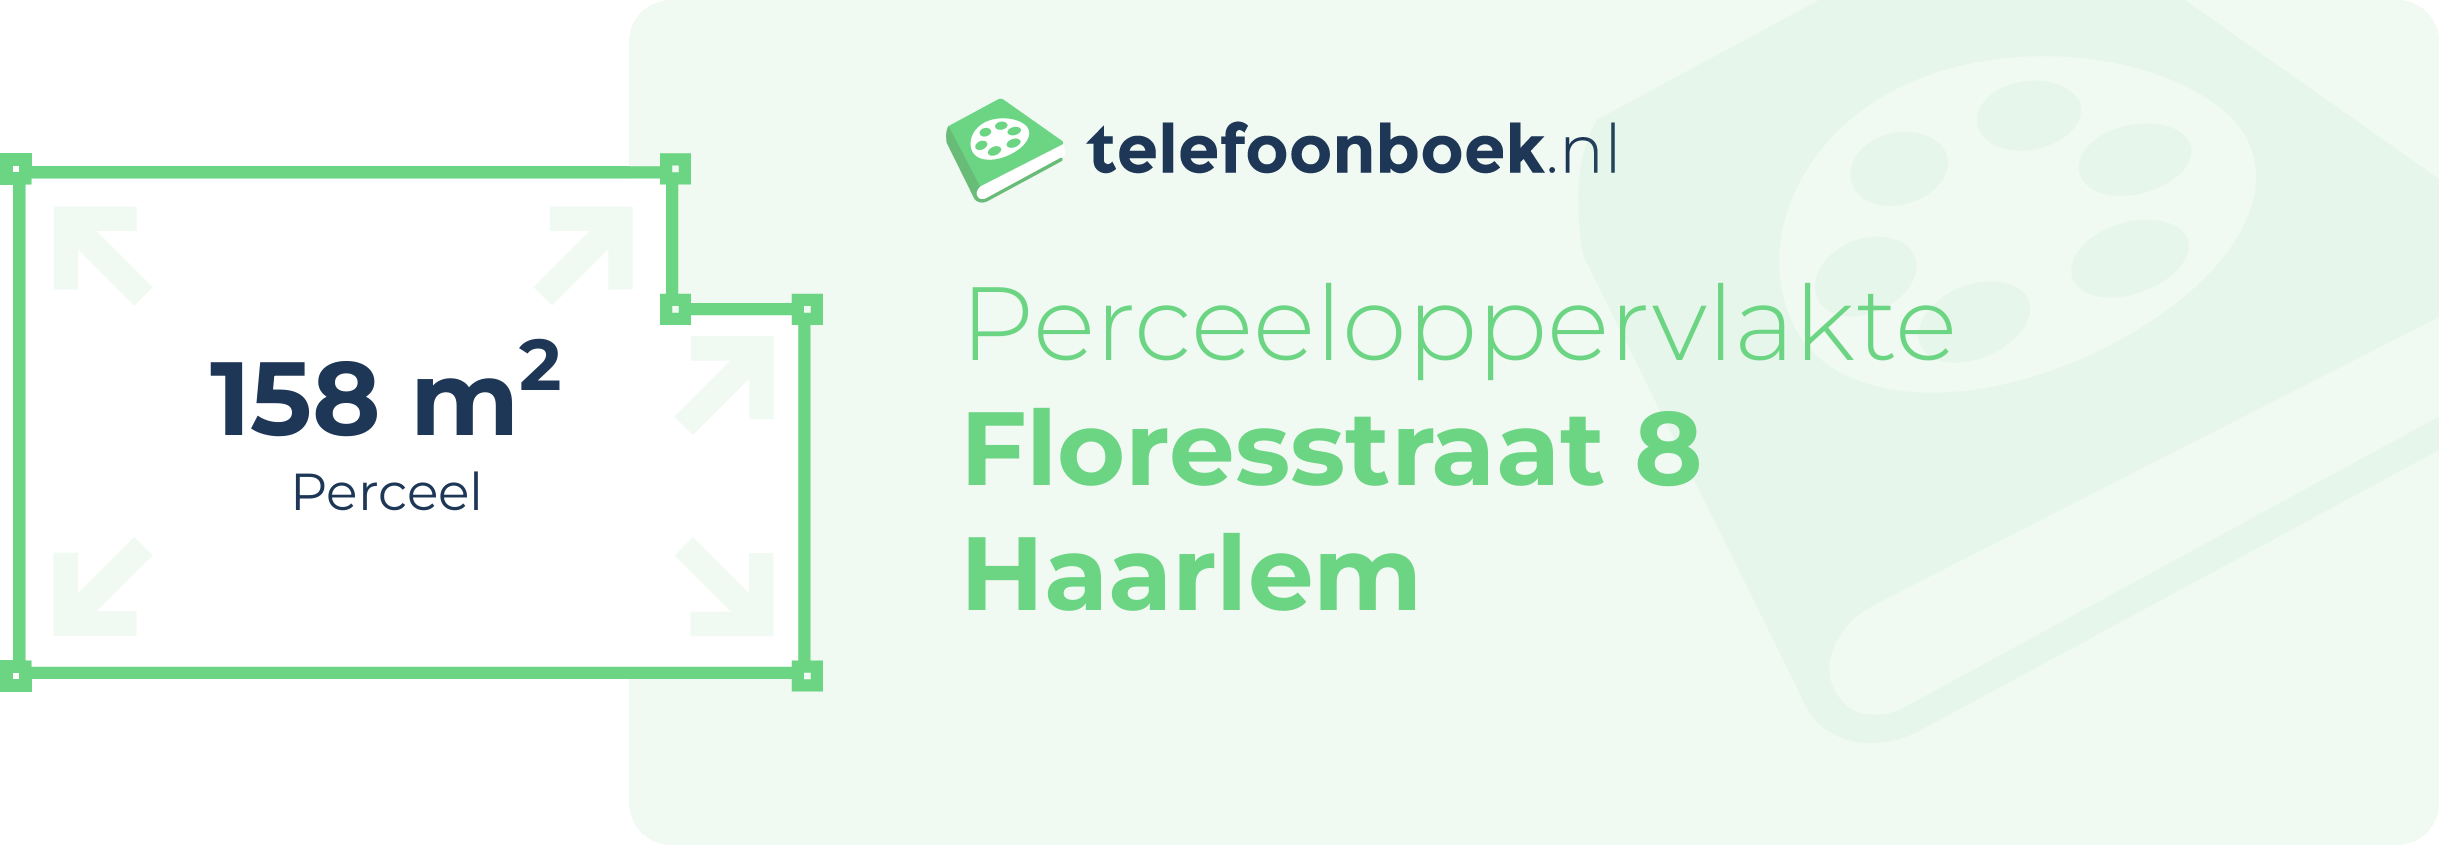 Perceeloppervlakte Floresstraat 8 Haarlem